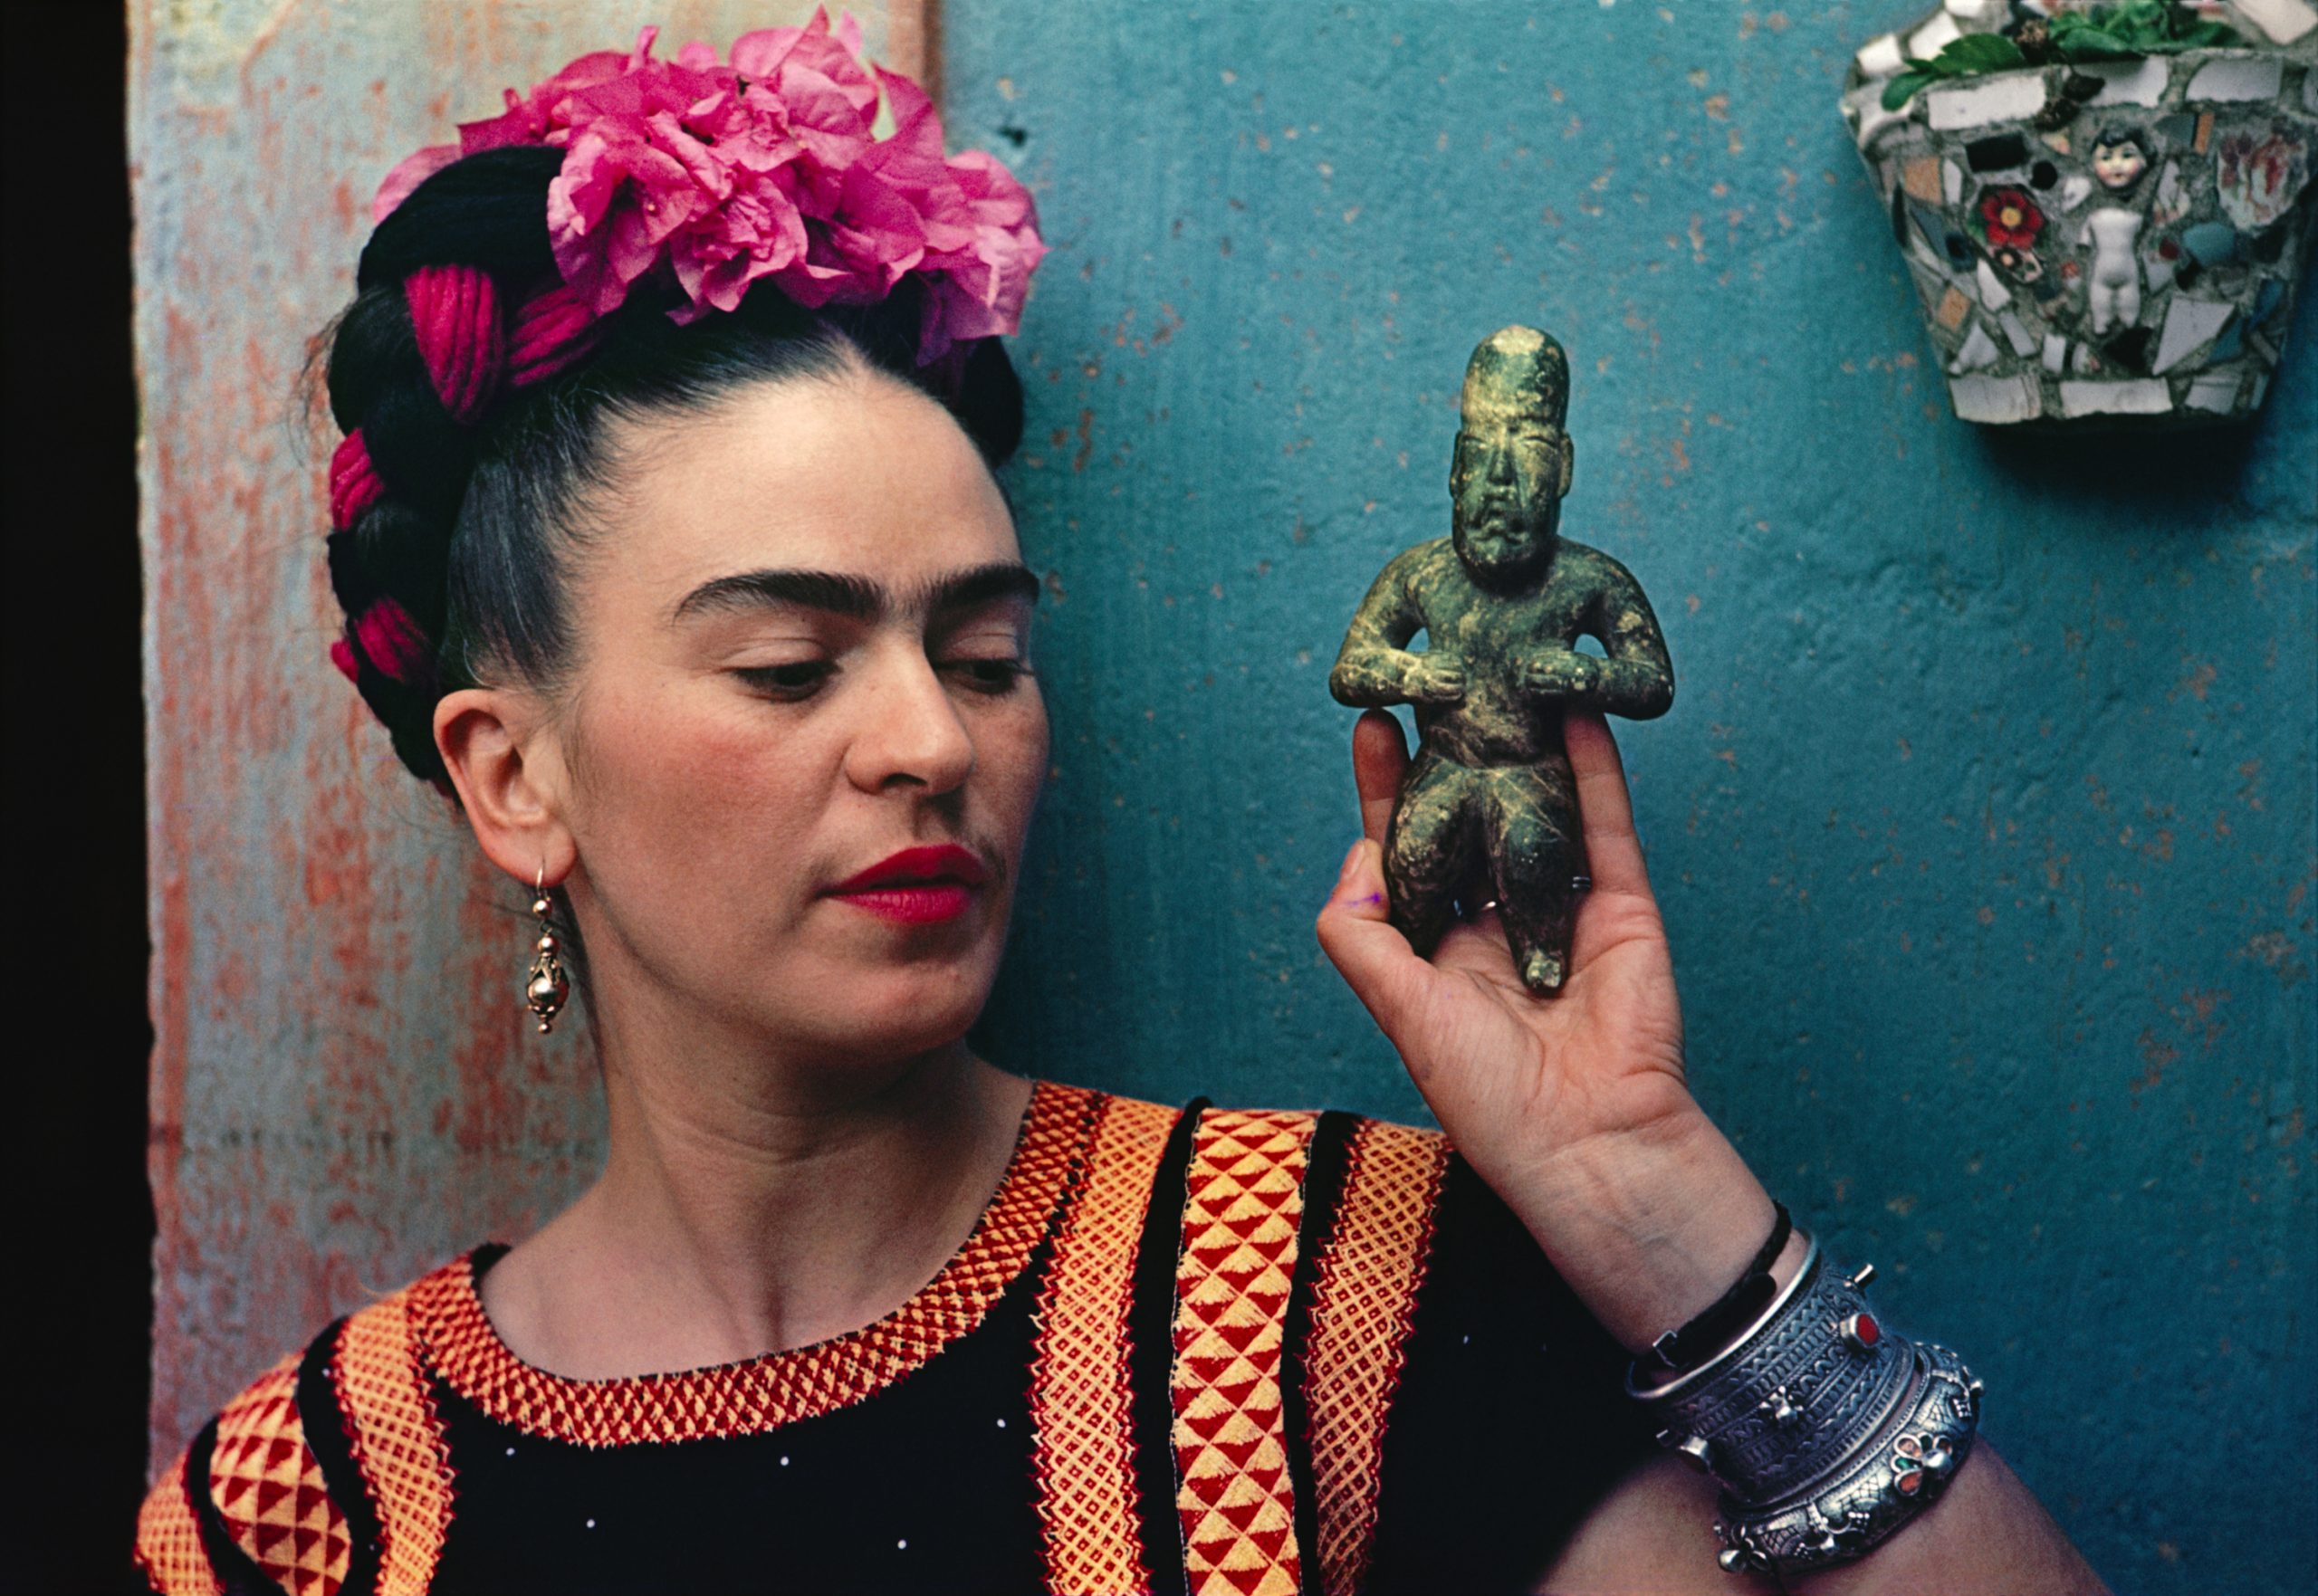 Inside the Frida Kahlo exhibition at the V&A: Making Her Self Up